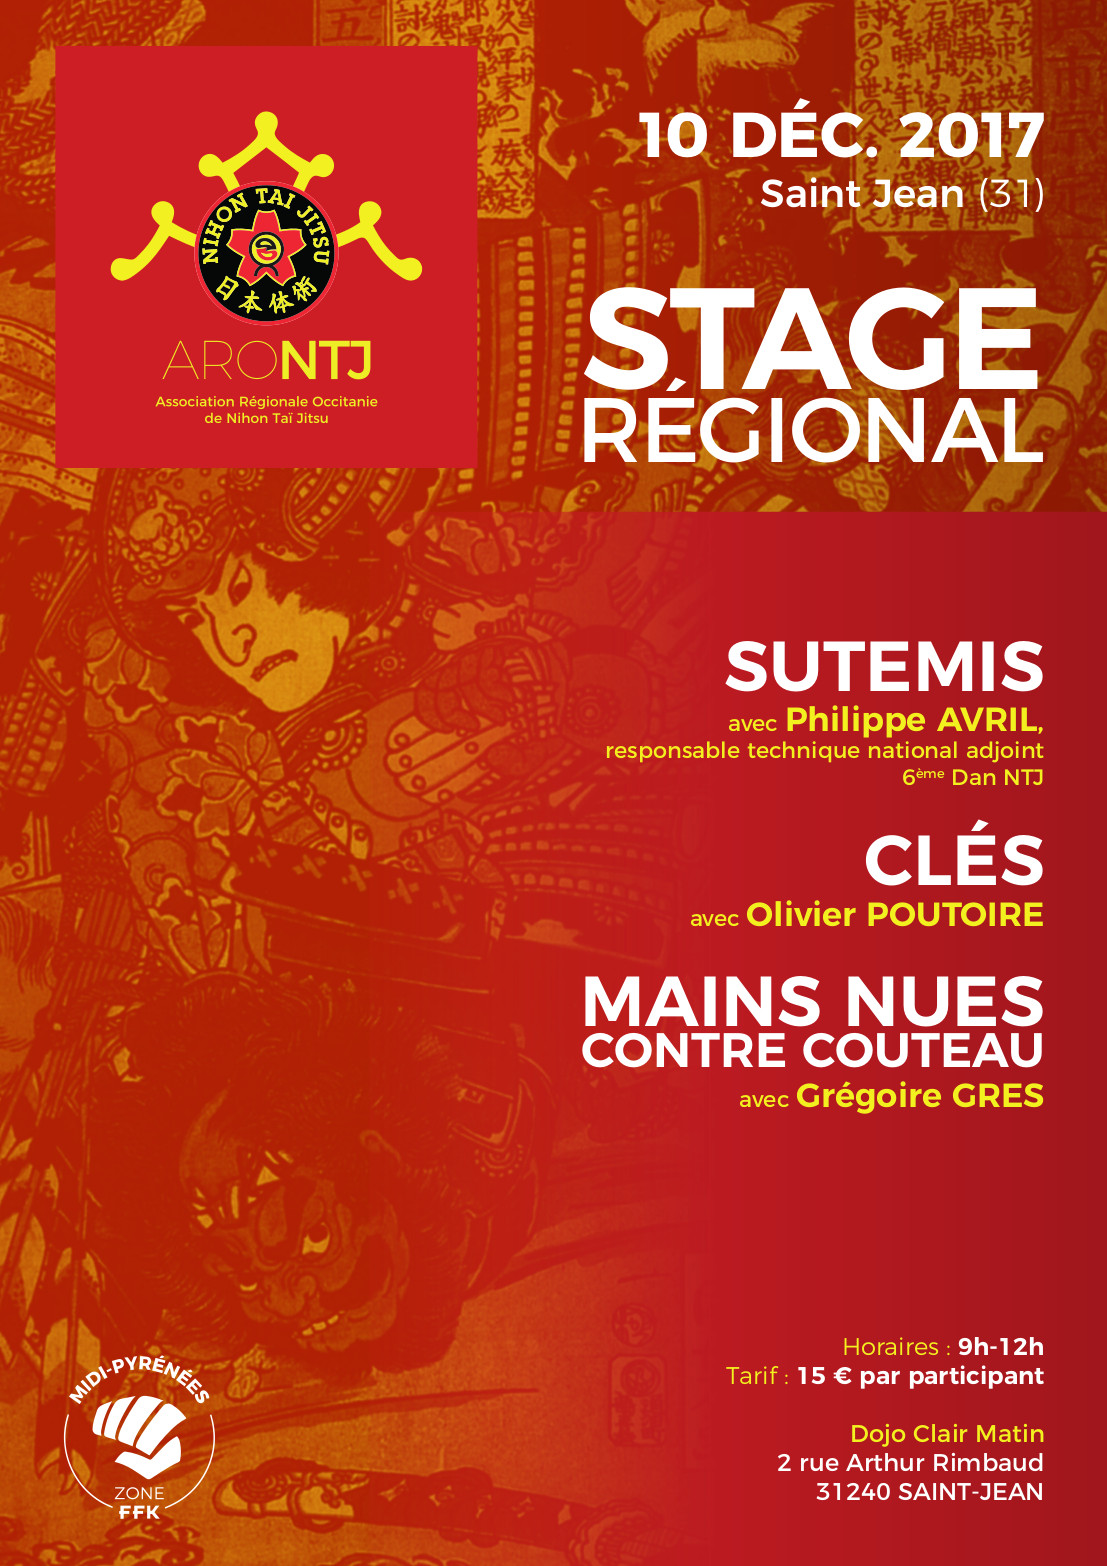 ARONTJ - stage regional 20171212 - affiche